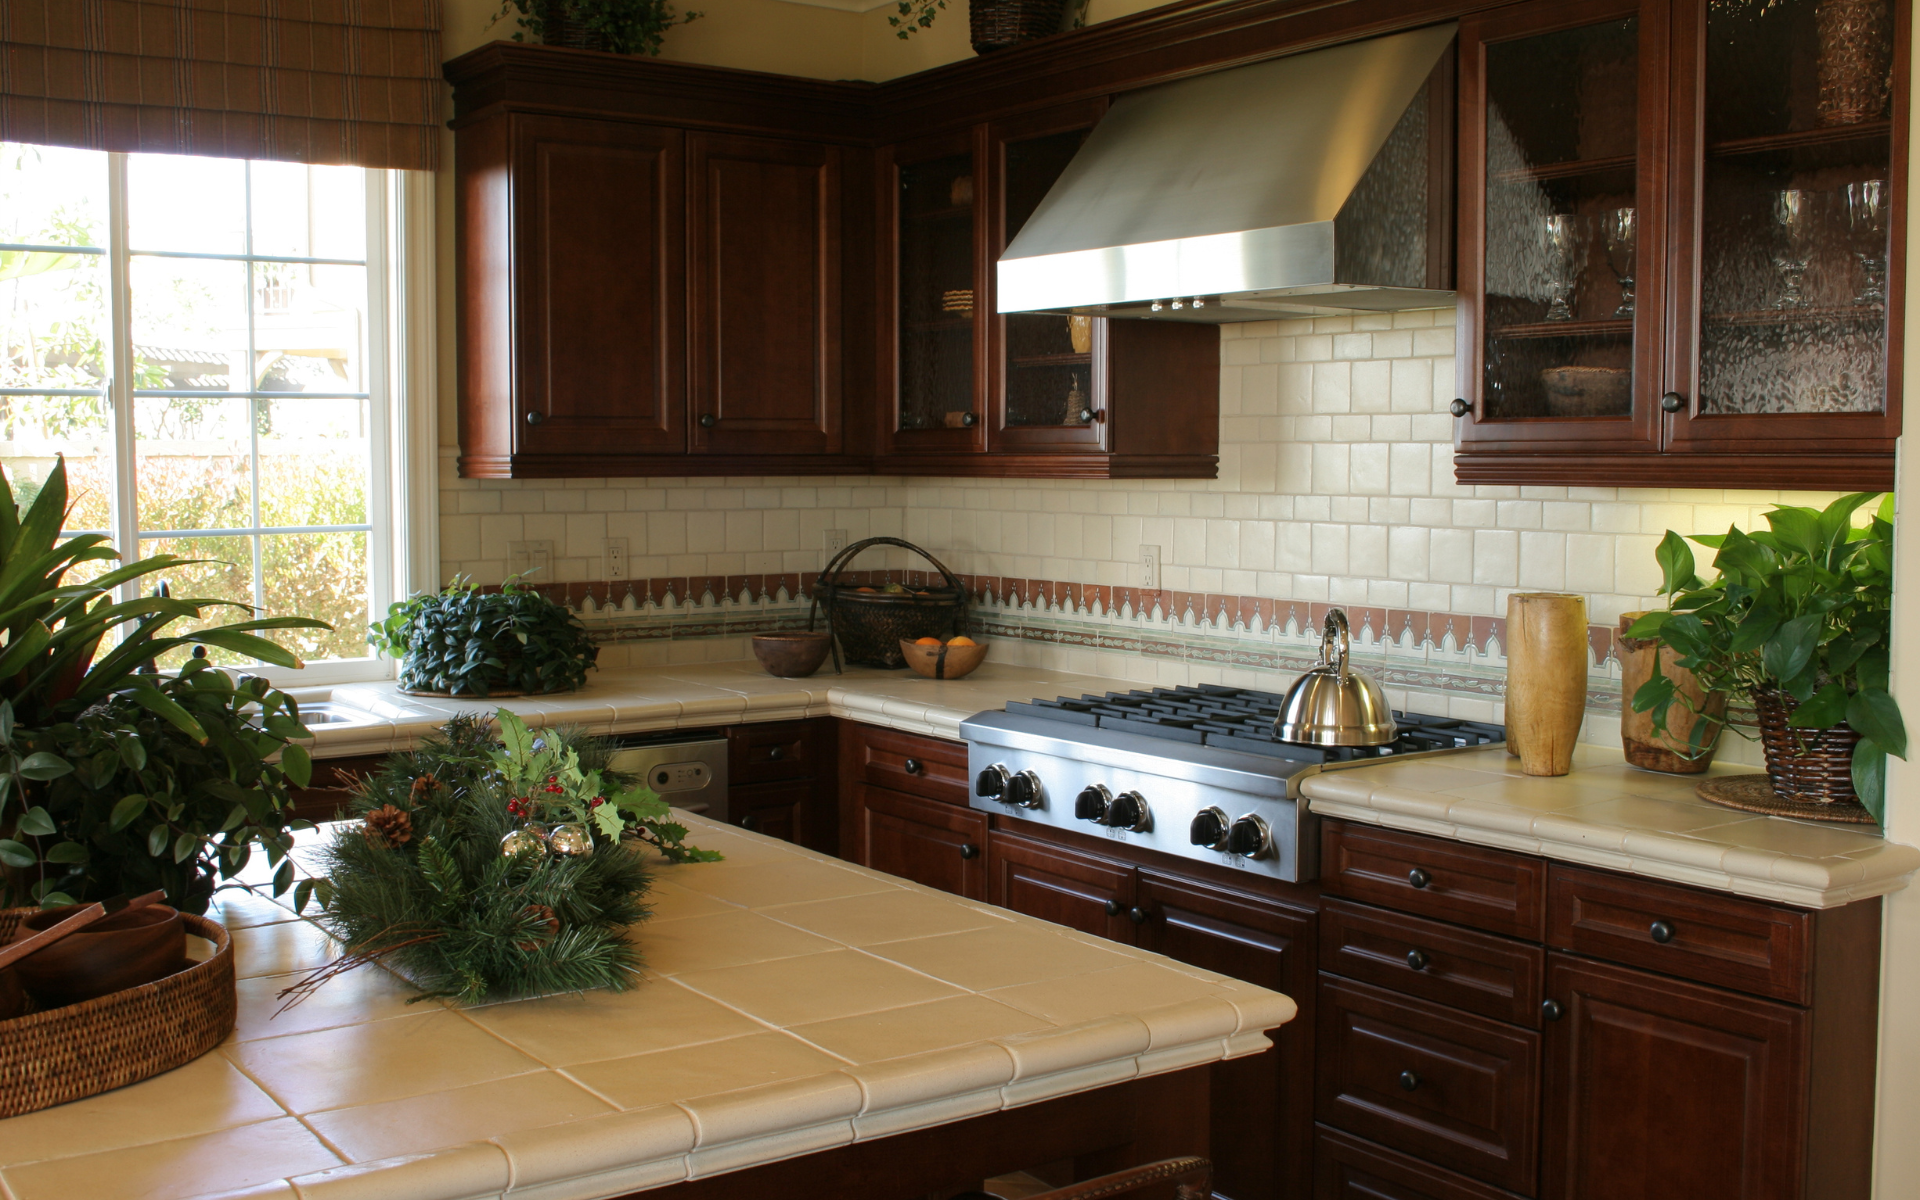 Kitchen style with dark brown cabinets